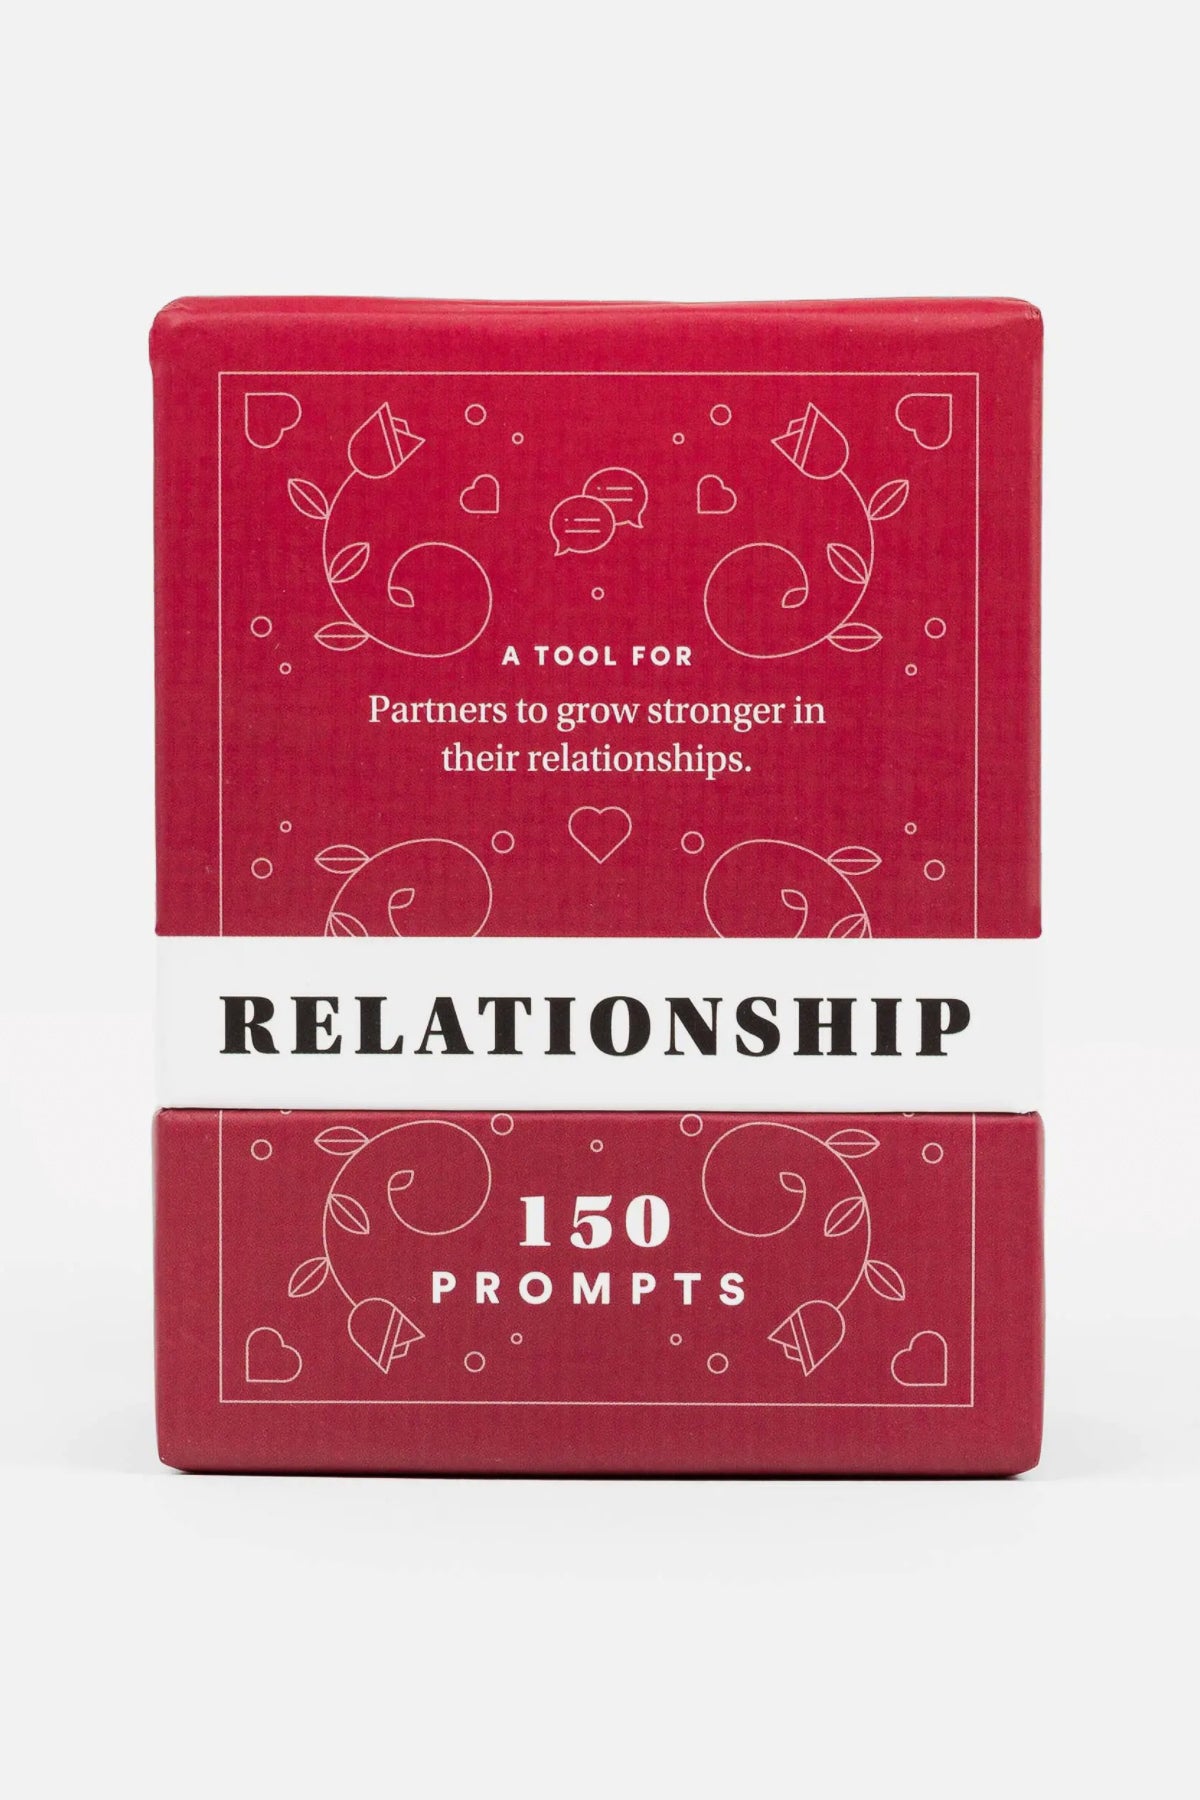 Relationship Card Deck Game